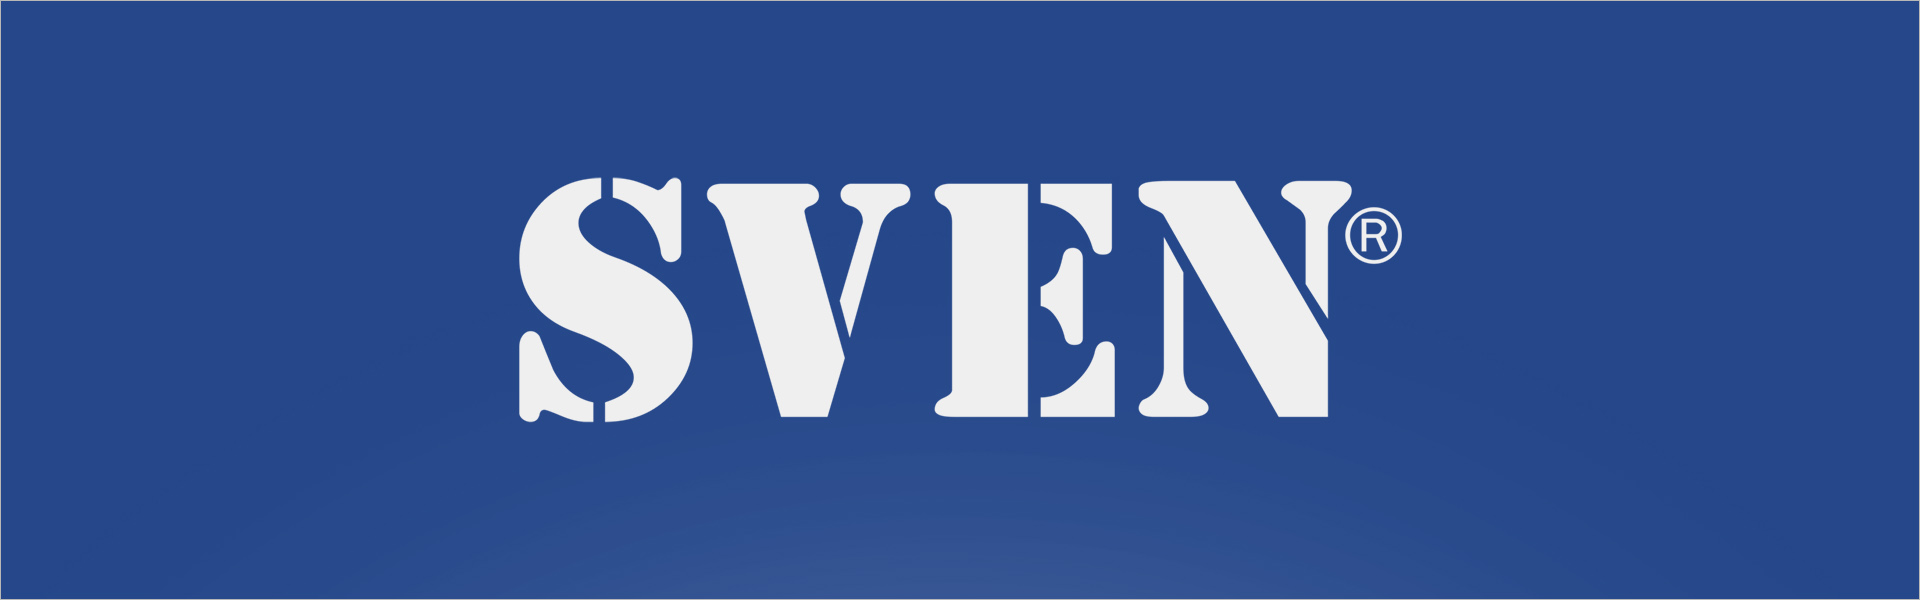 Sven MS-1820 Sven